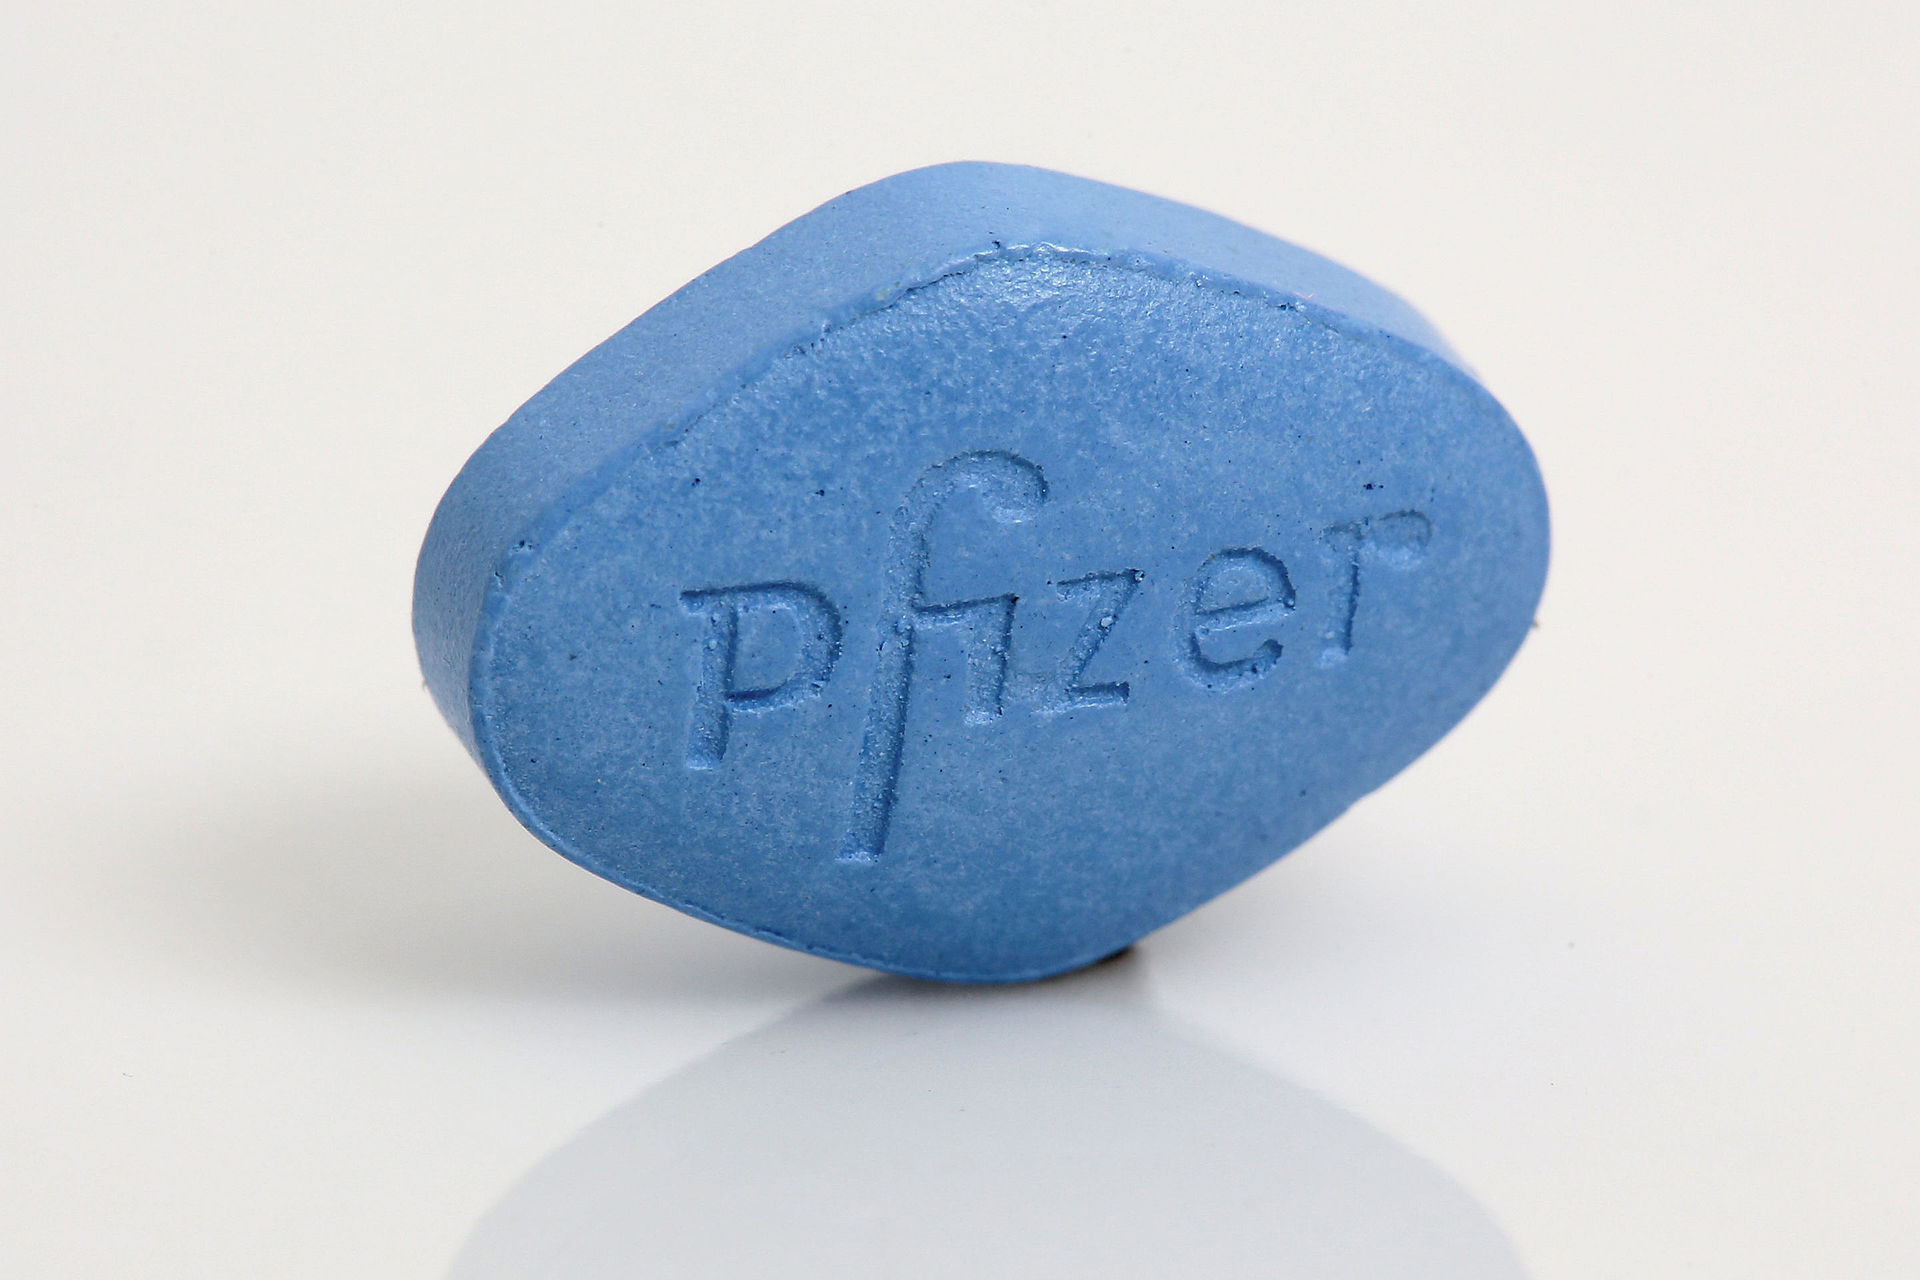 La píldora azul original – Viagra